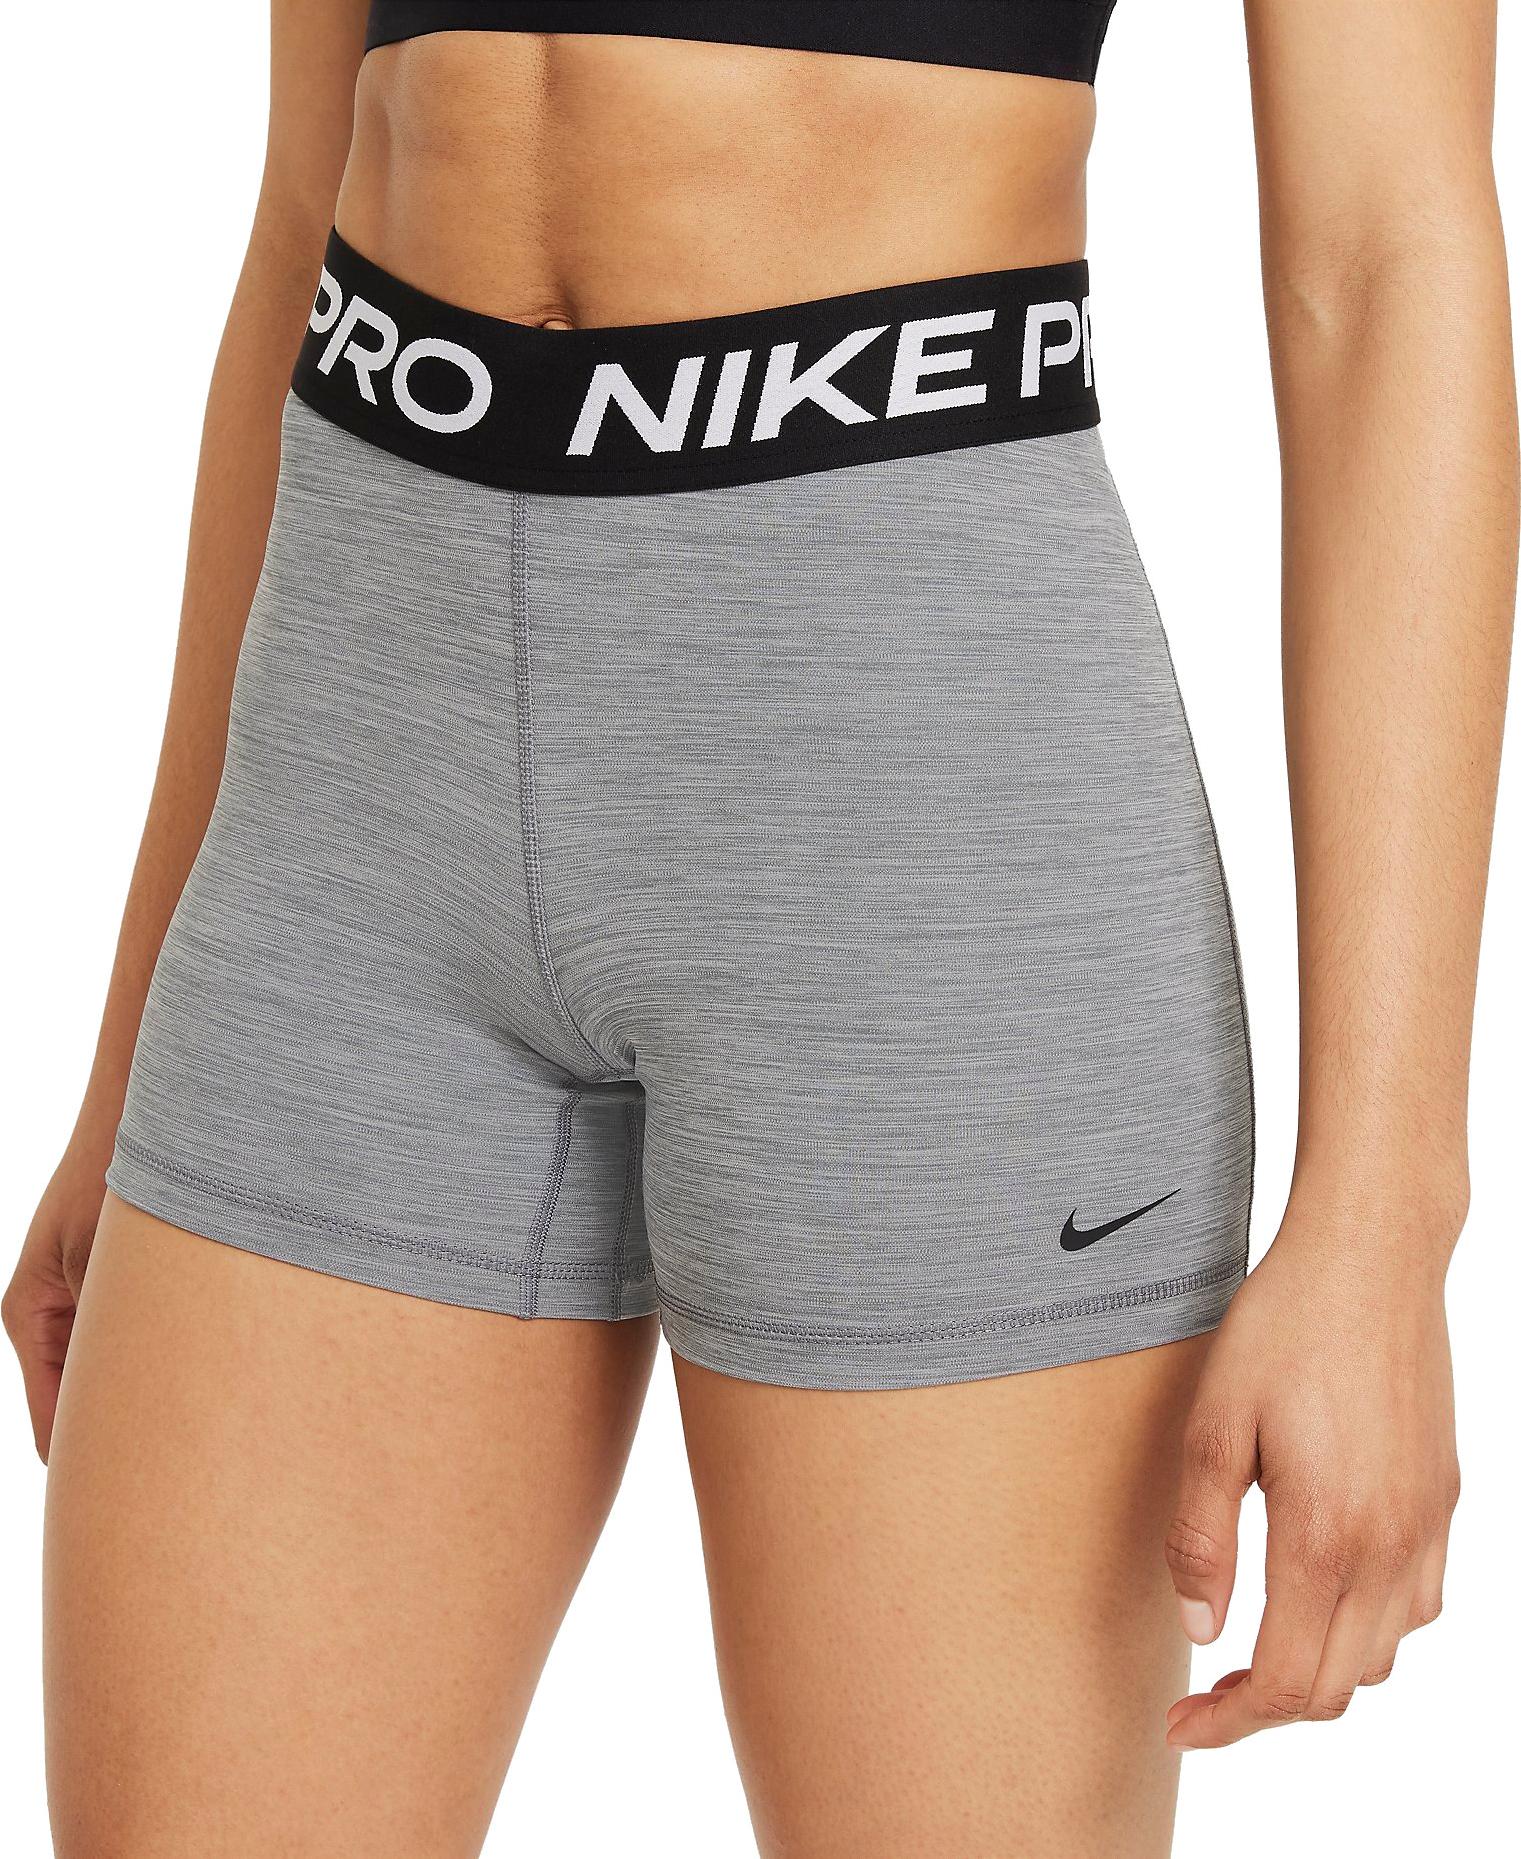 Pantalón corto Nike Pro 365 SHORT 5IN